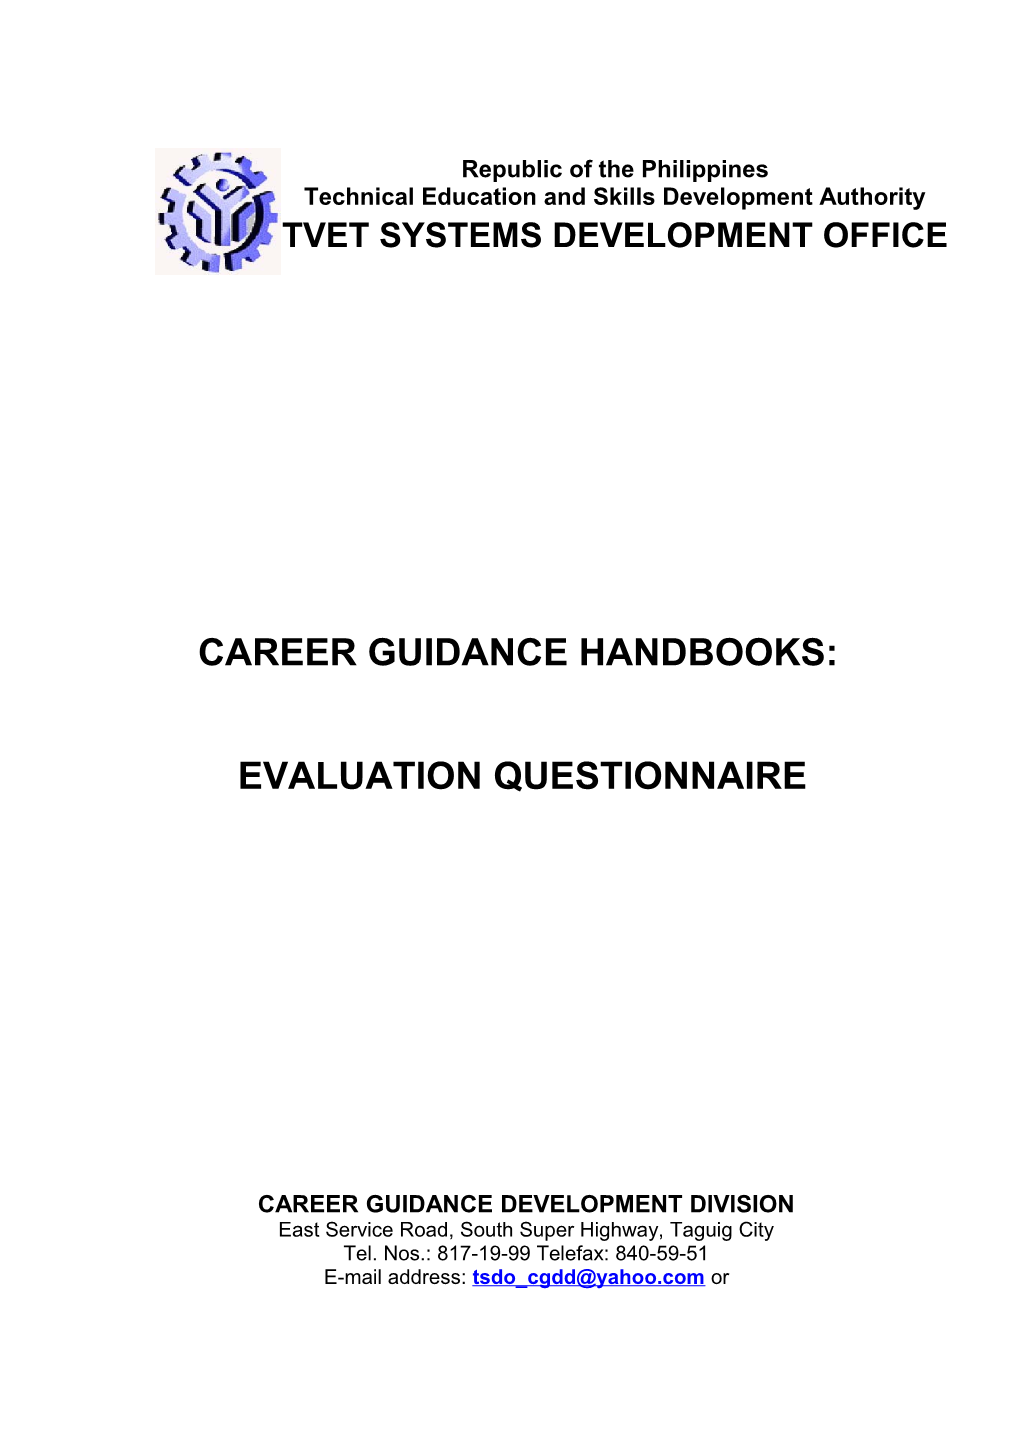 Career Guidance Handbook Evaluation